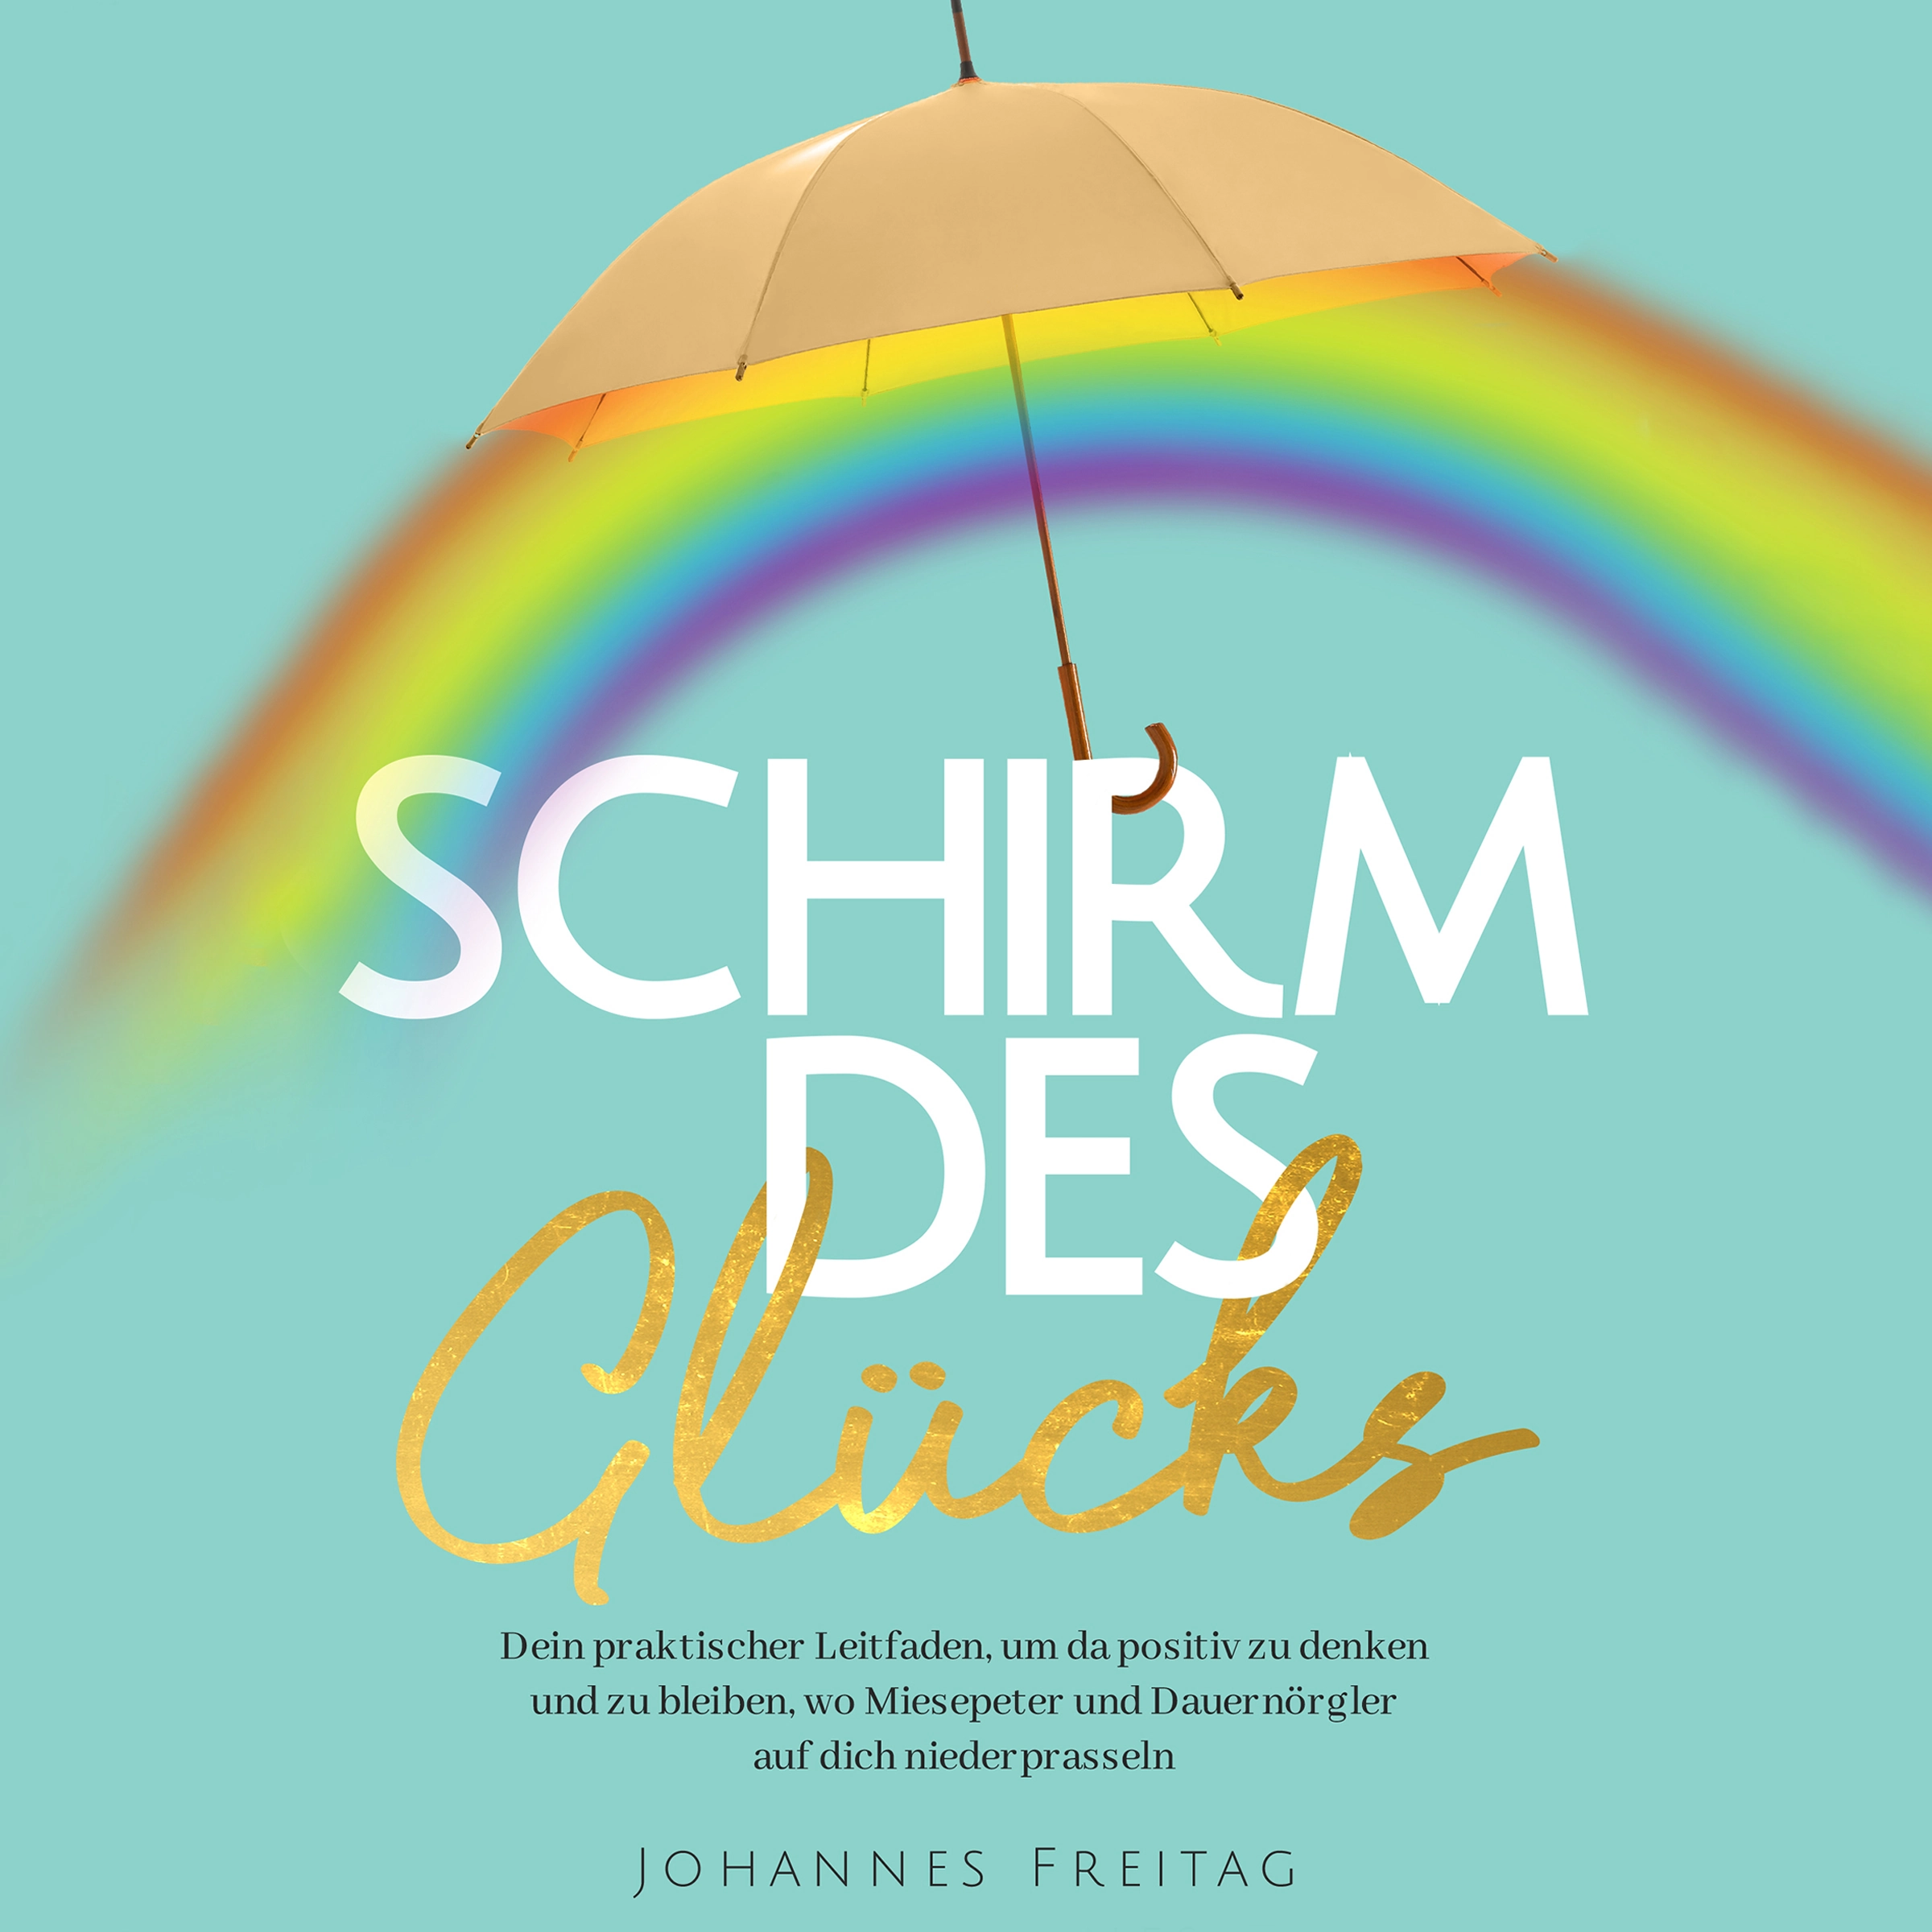 Schirm des Glücks by Johannes Freitag Audiobook